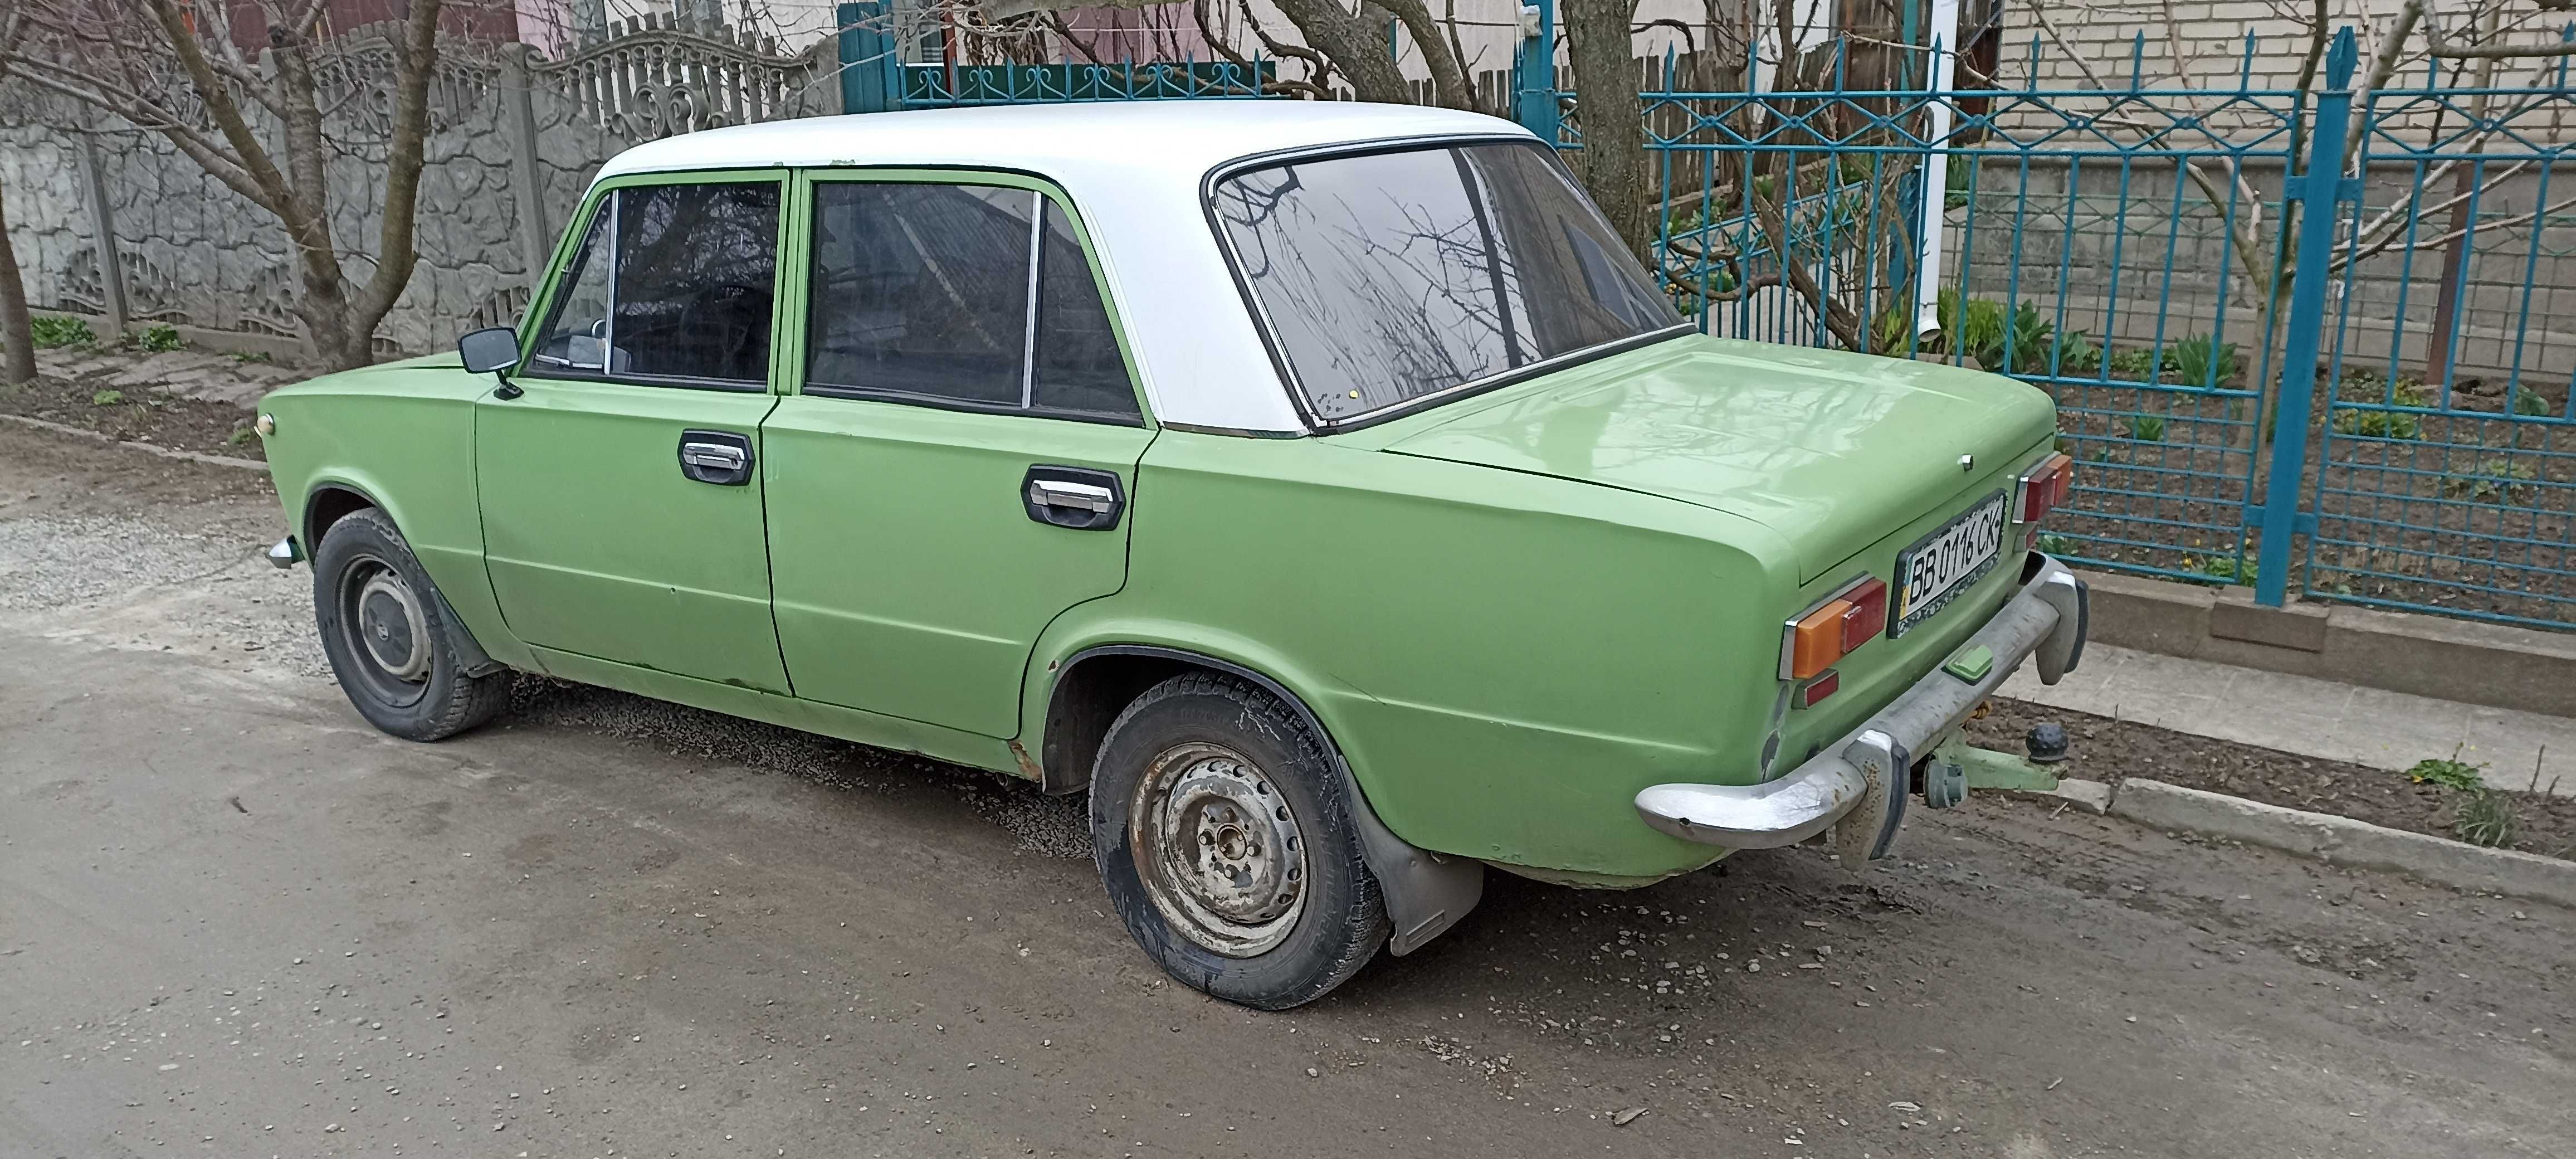 Продам ВАЗ-01 1979 г.